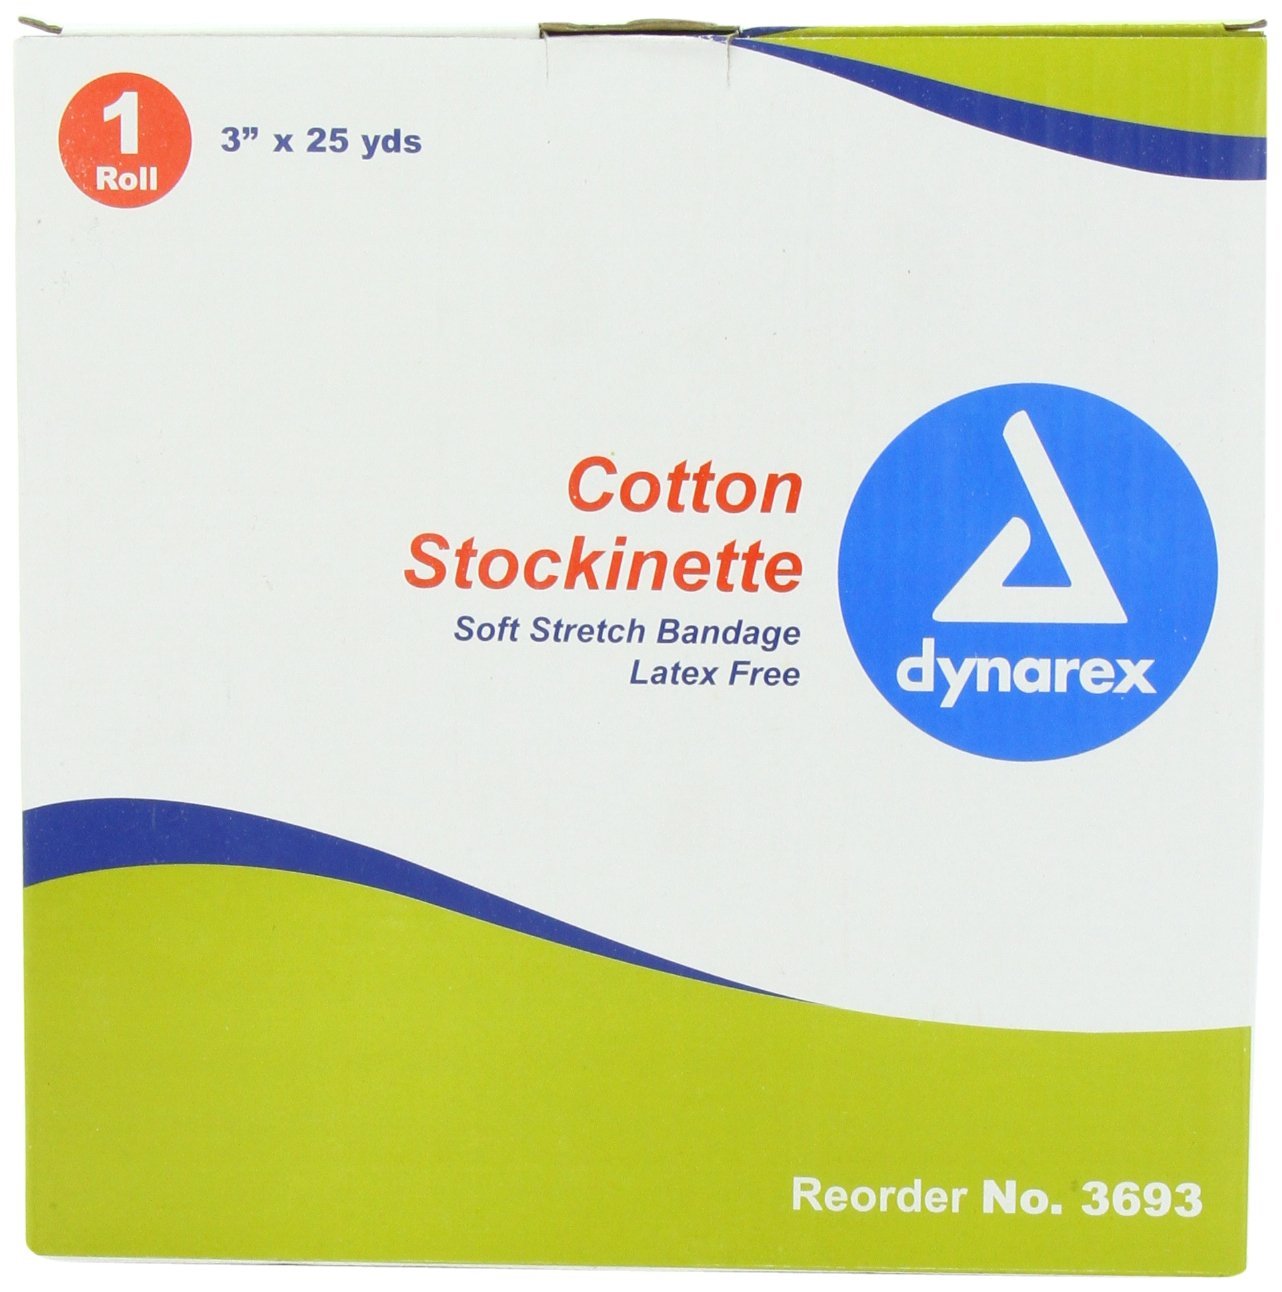 Dynarex Cotton Stockinette Soft Stretch Bandage - image 1 of 3